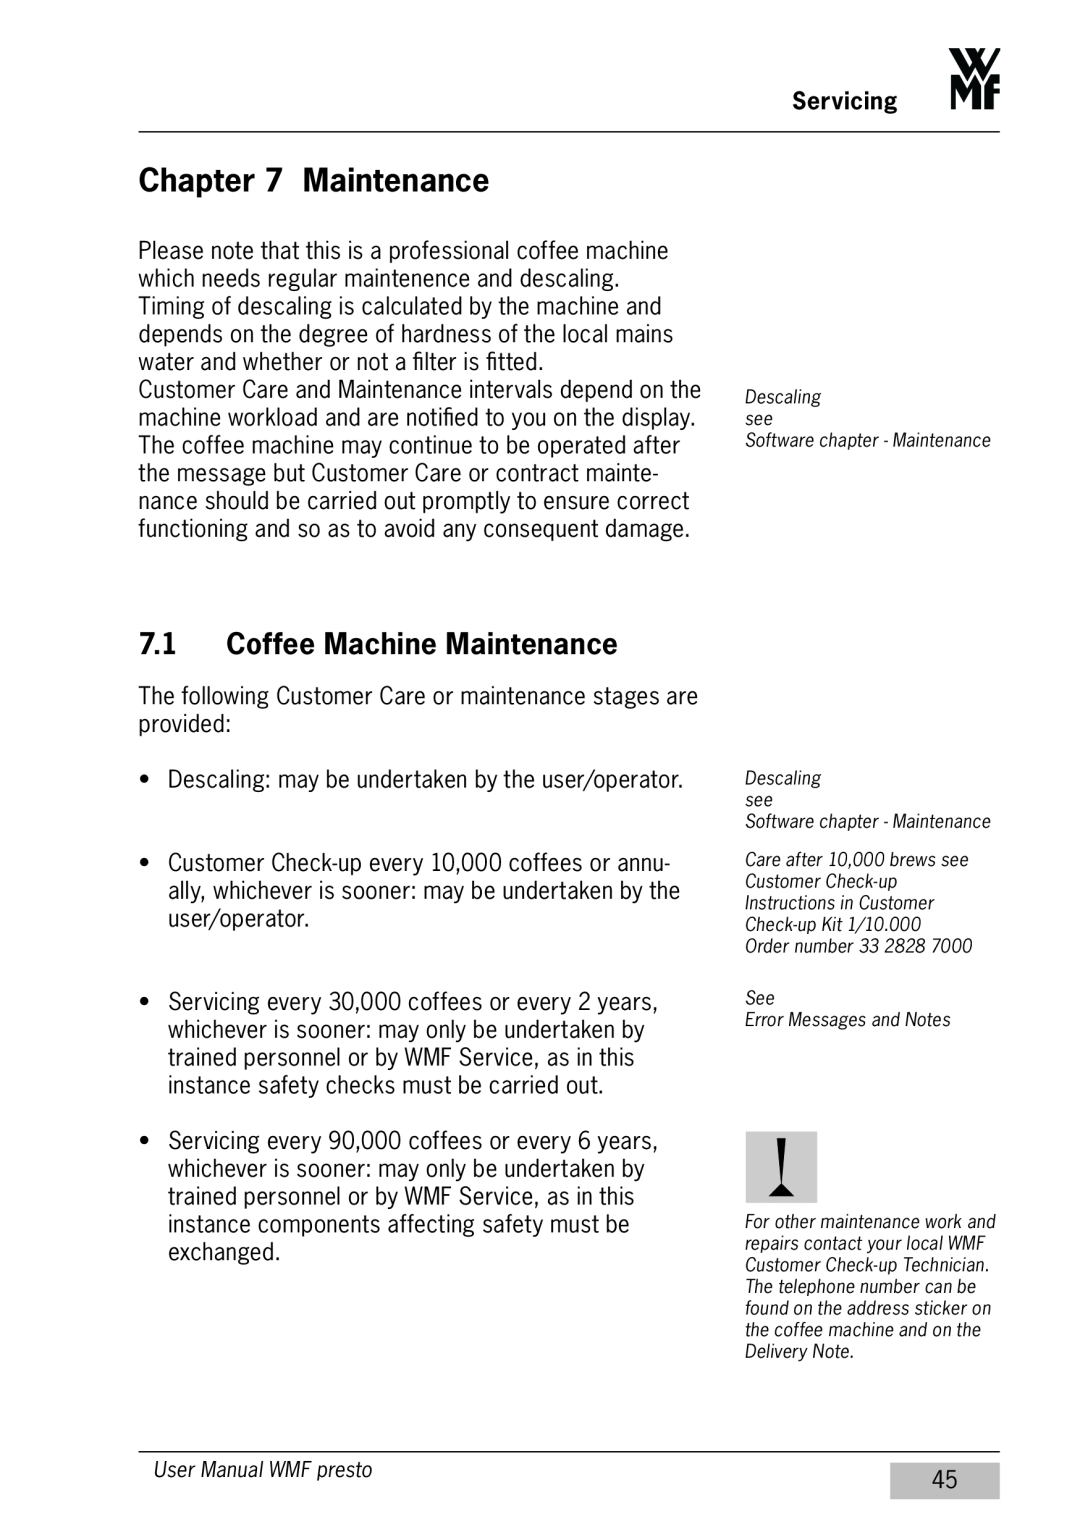 WMF Americas 1400 user manual Coffee Machine Maintenance, Servicing 